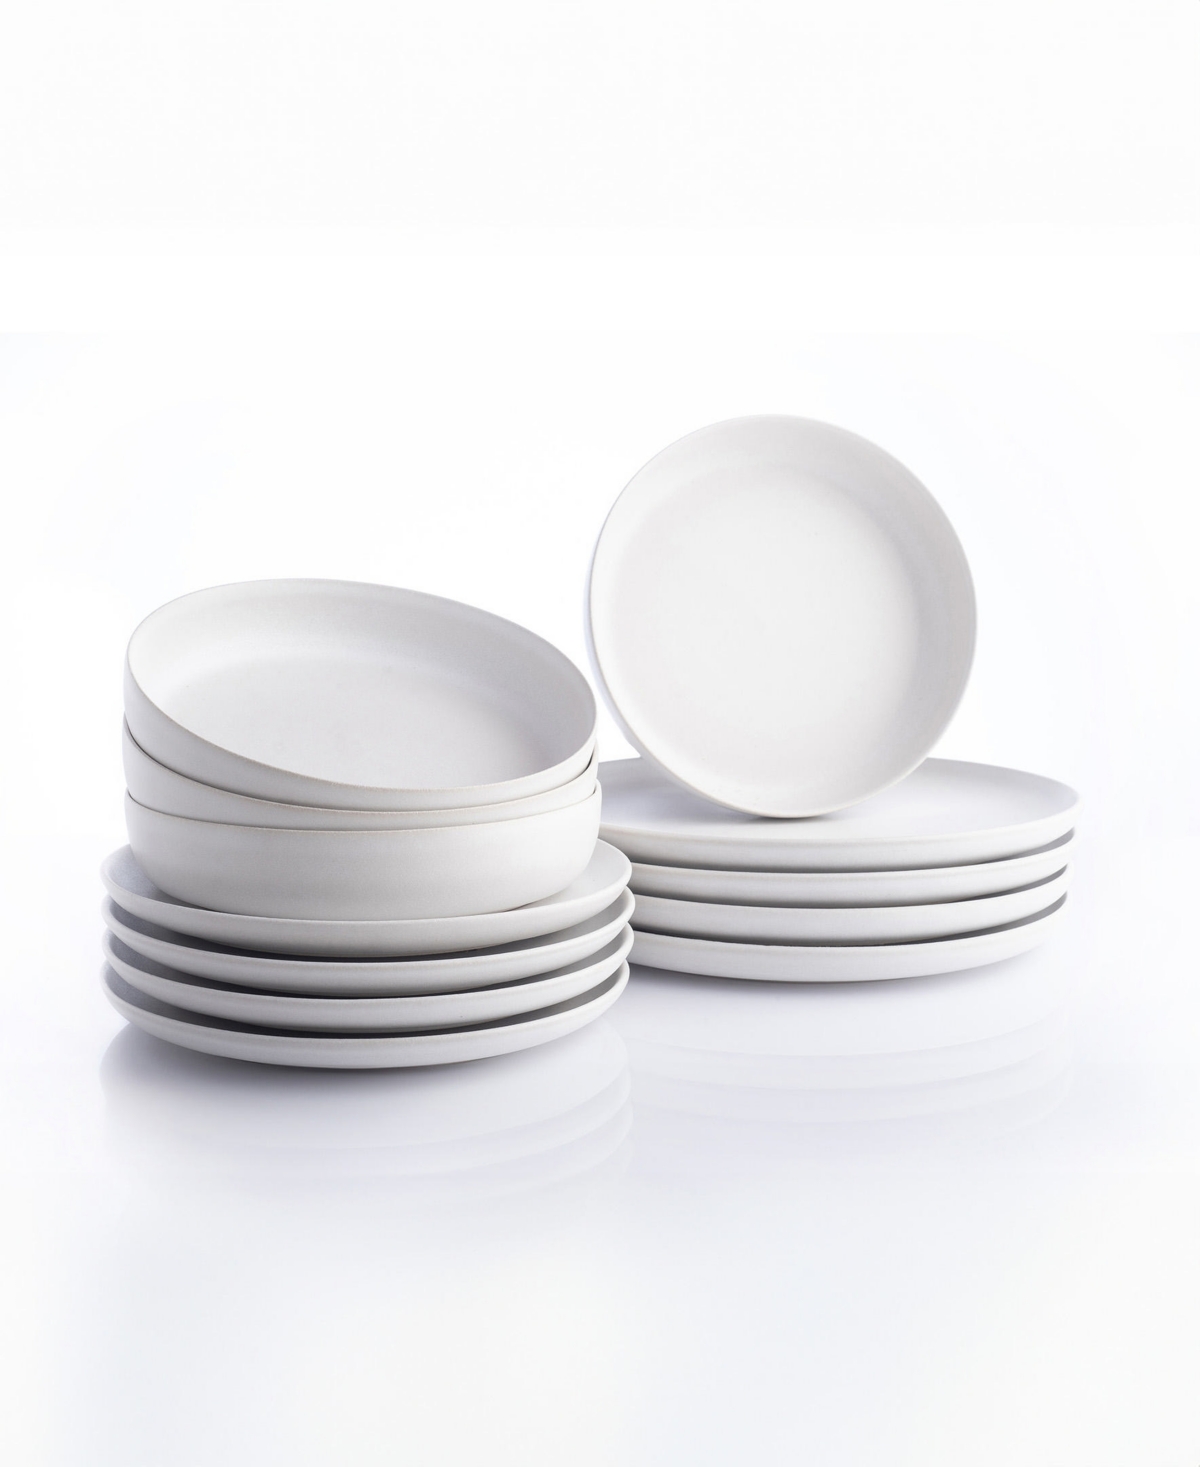 Porto by Stone Lain Macchio Stoneware Full Dinnerware Set, 12 Pcs, Service for 4 - White Matte